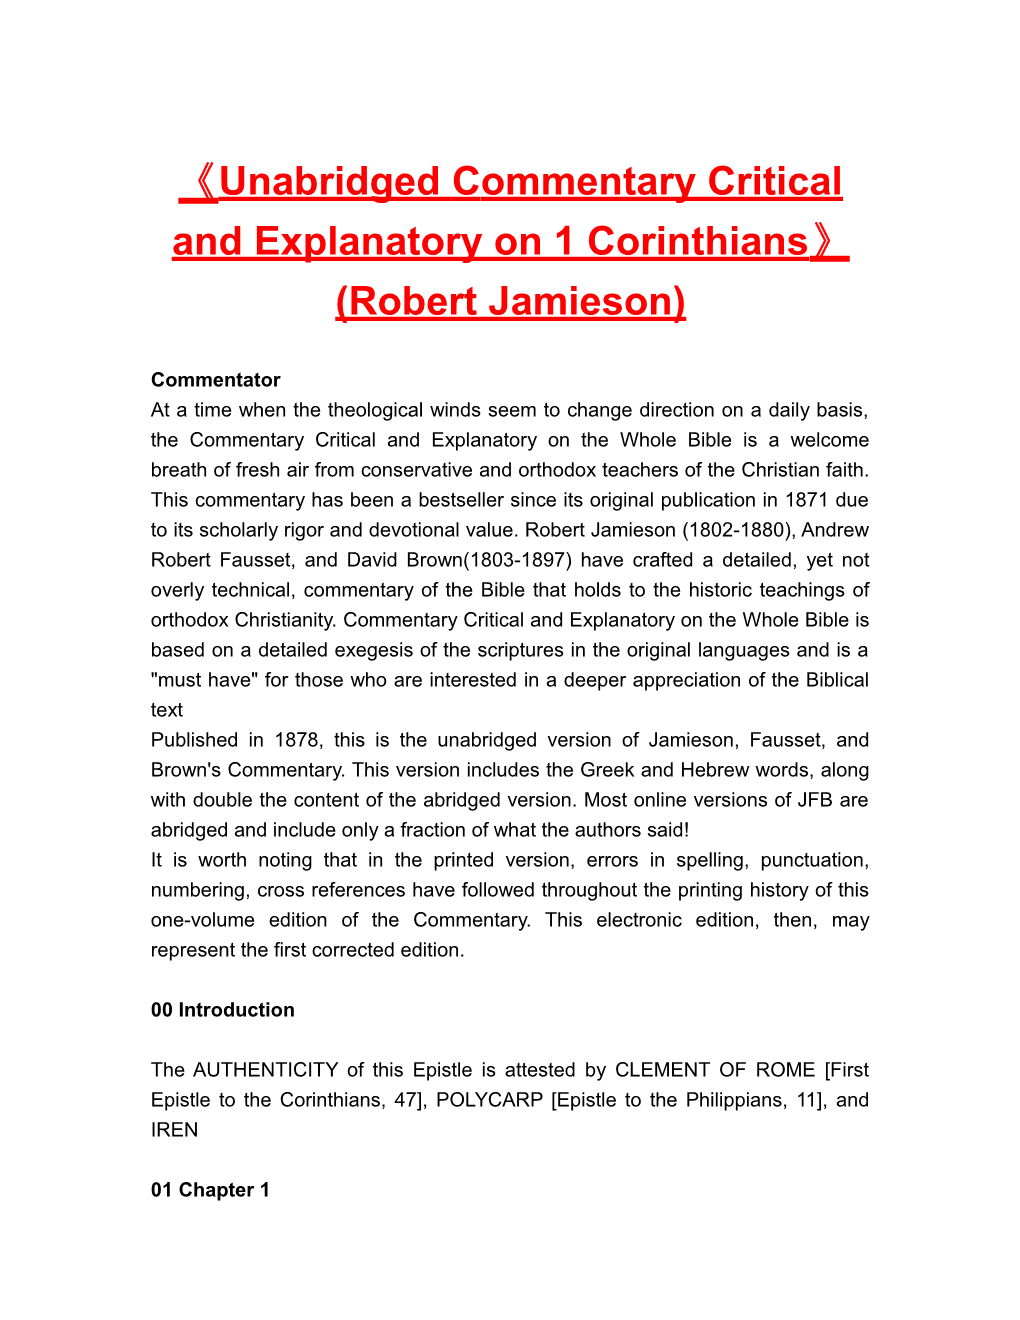 Unabridged Commentarycritical and Explanatory on 1 Corinthians (Robert Jamieson)